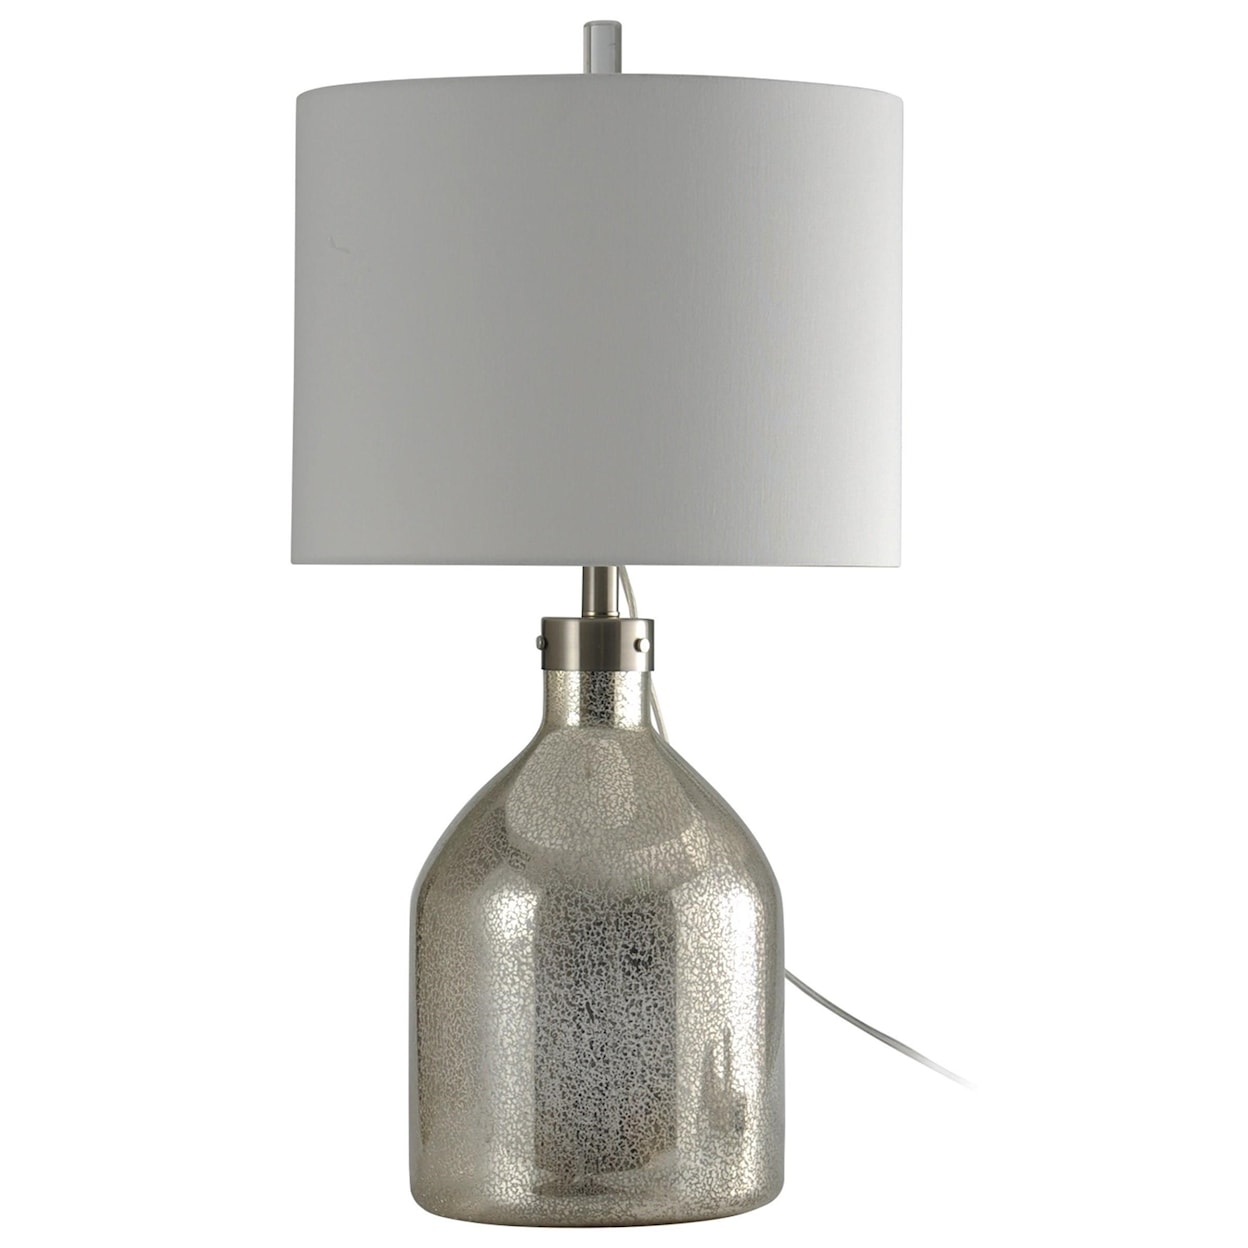 StyleCraft Lamps Mercury Glass Table Lamp